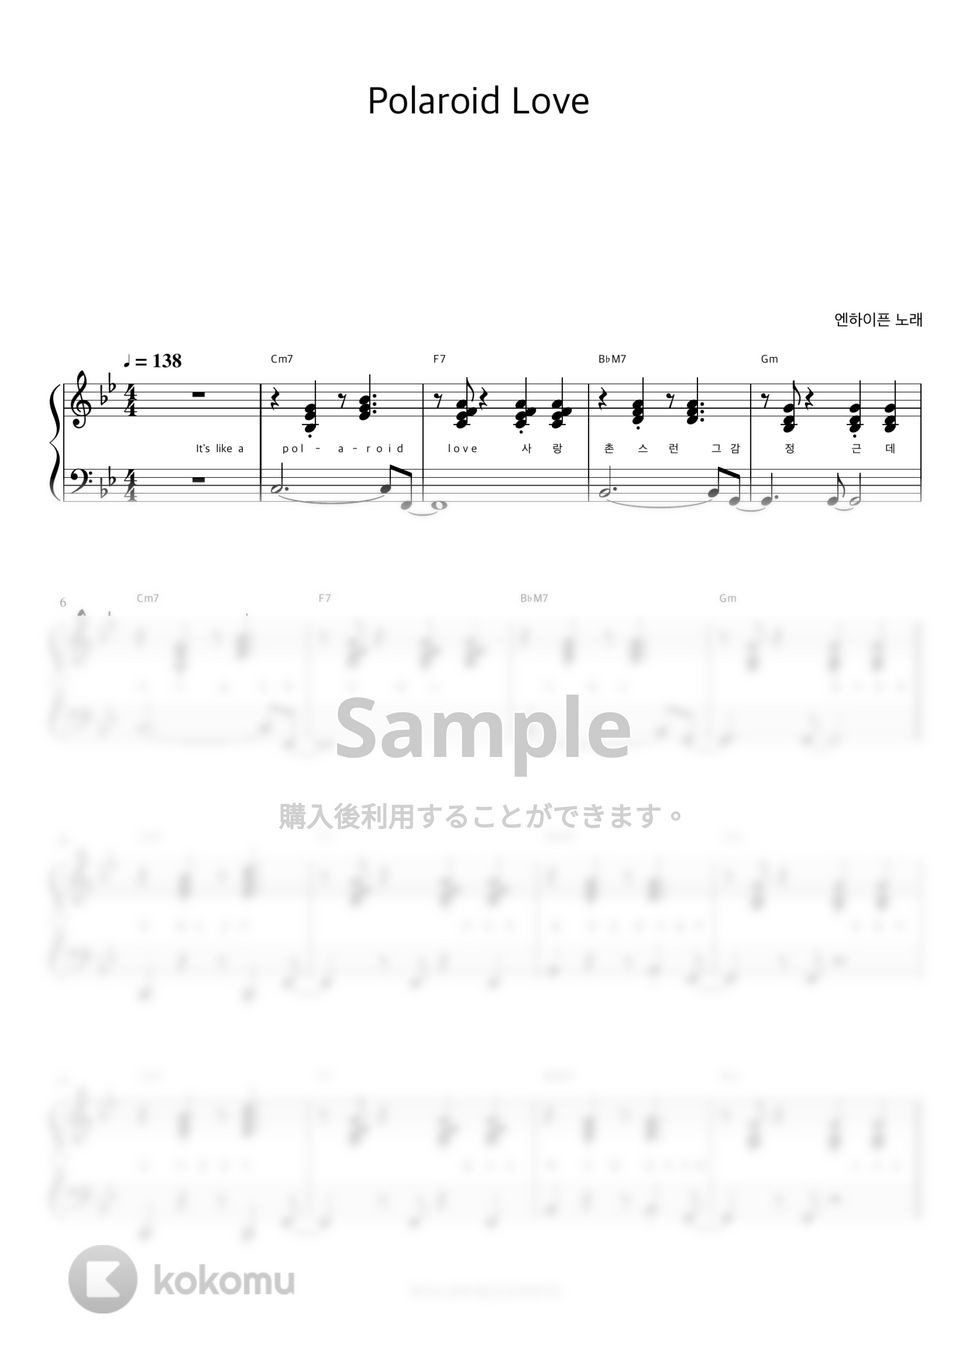 ENHYPEN - Polaroid Love (伴奏楽譜) by 피아노정류장